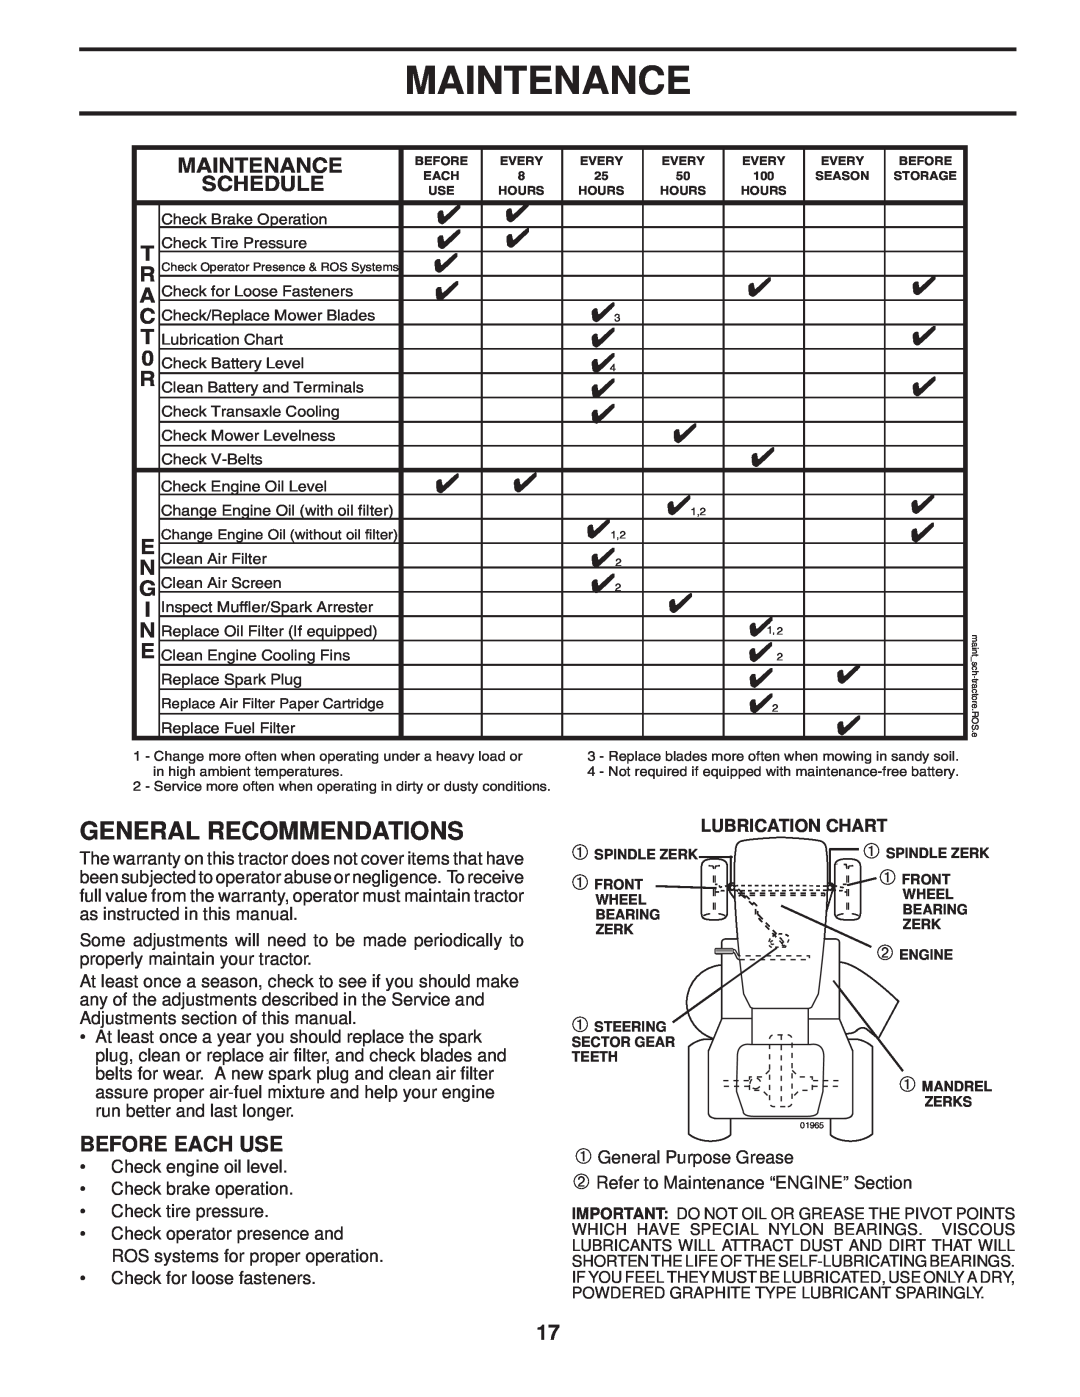 Husqvarna 2754 GLS manual Maintenance, Lubrication Chart 